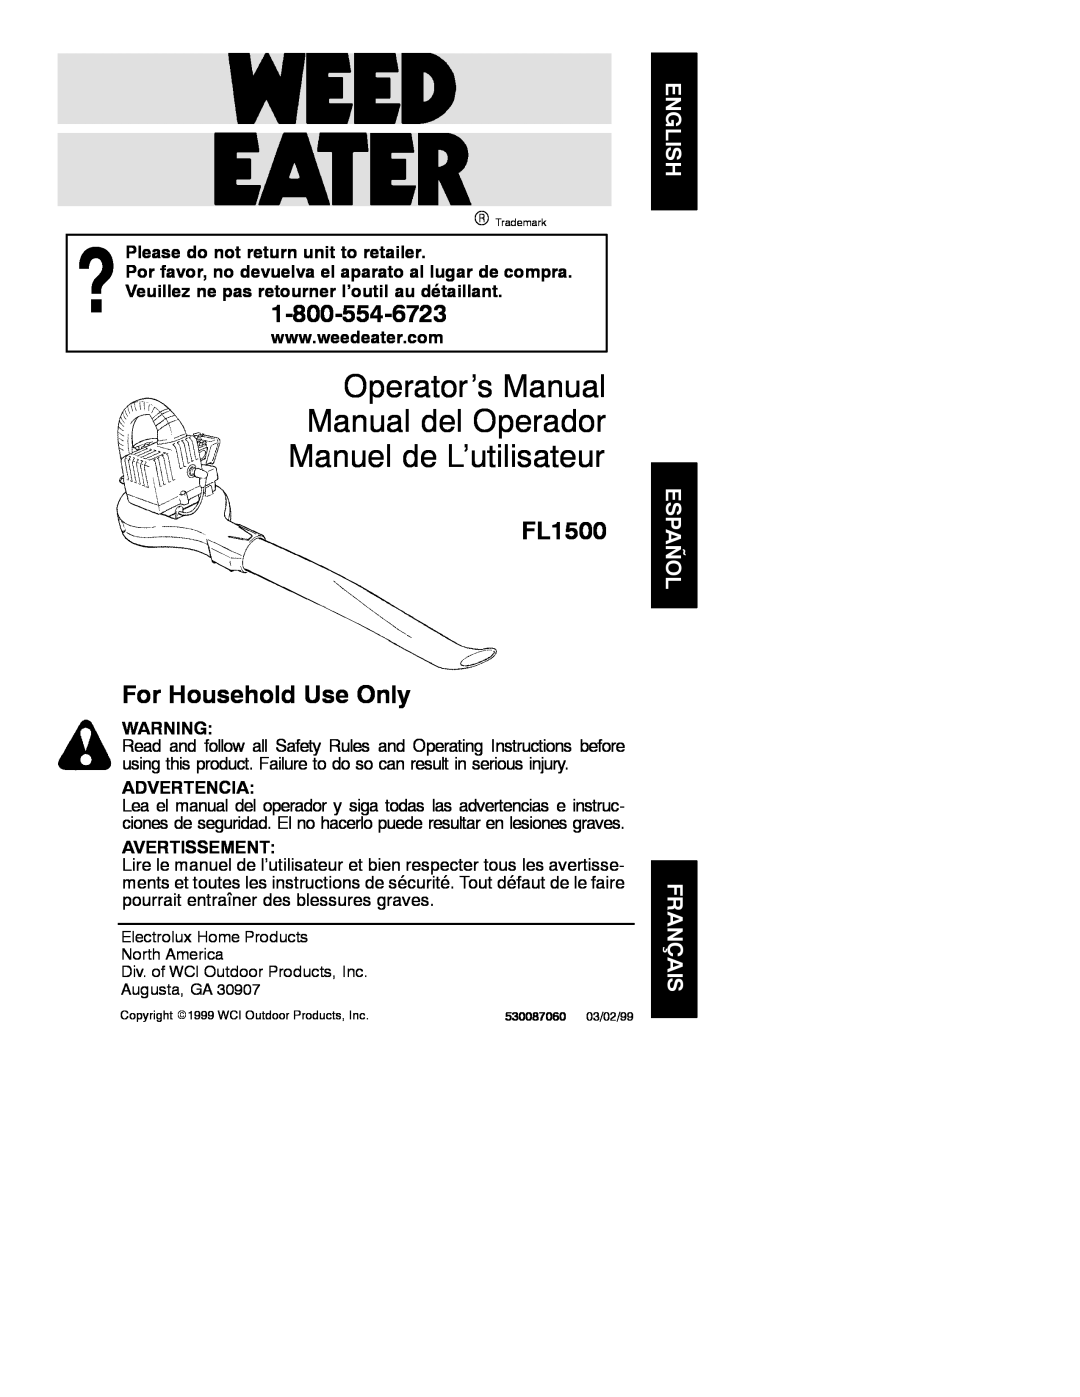 Poulan manual Operator’s Manual Manual del Operador, Manuel de L’utilisateur, FL1500 For Household Use Only 